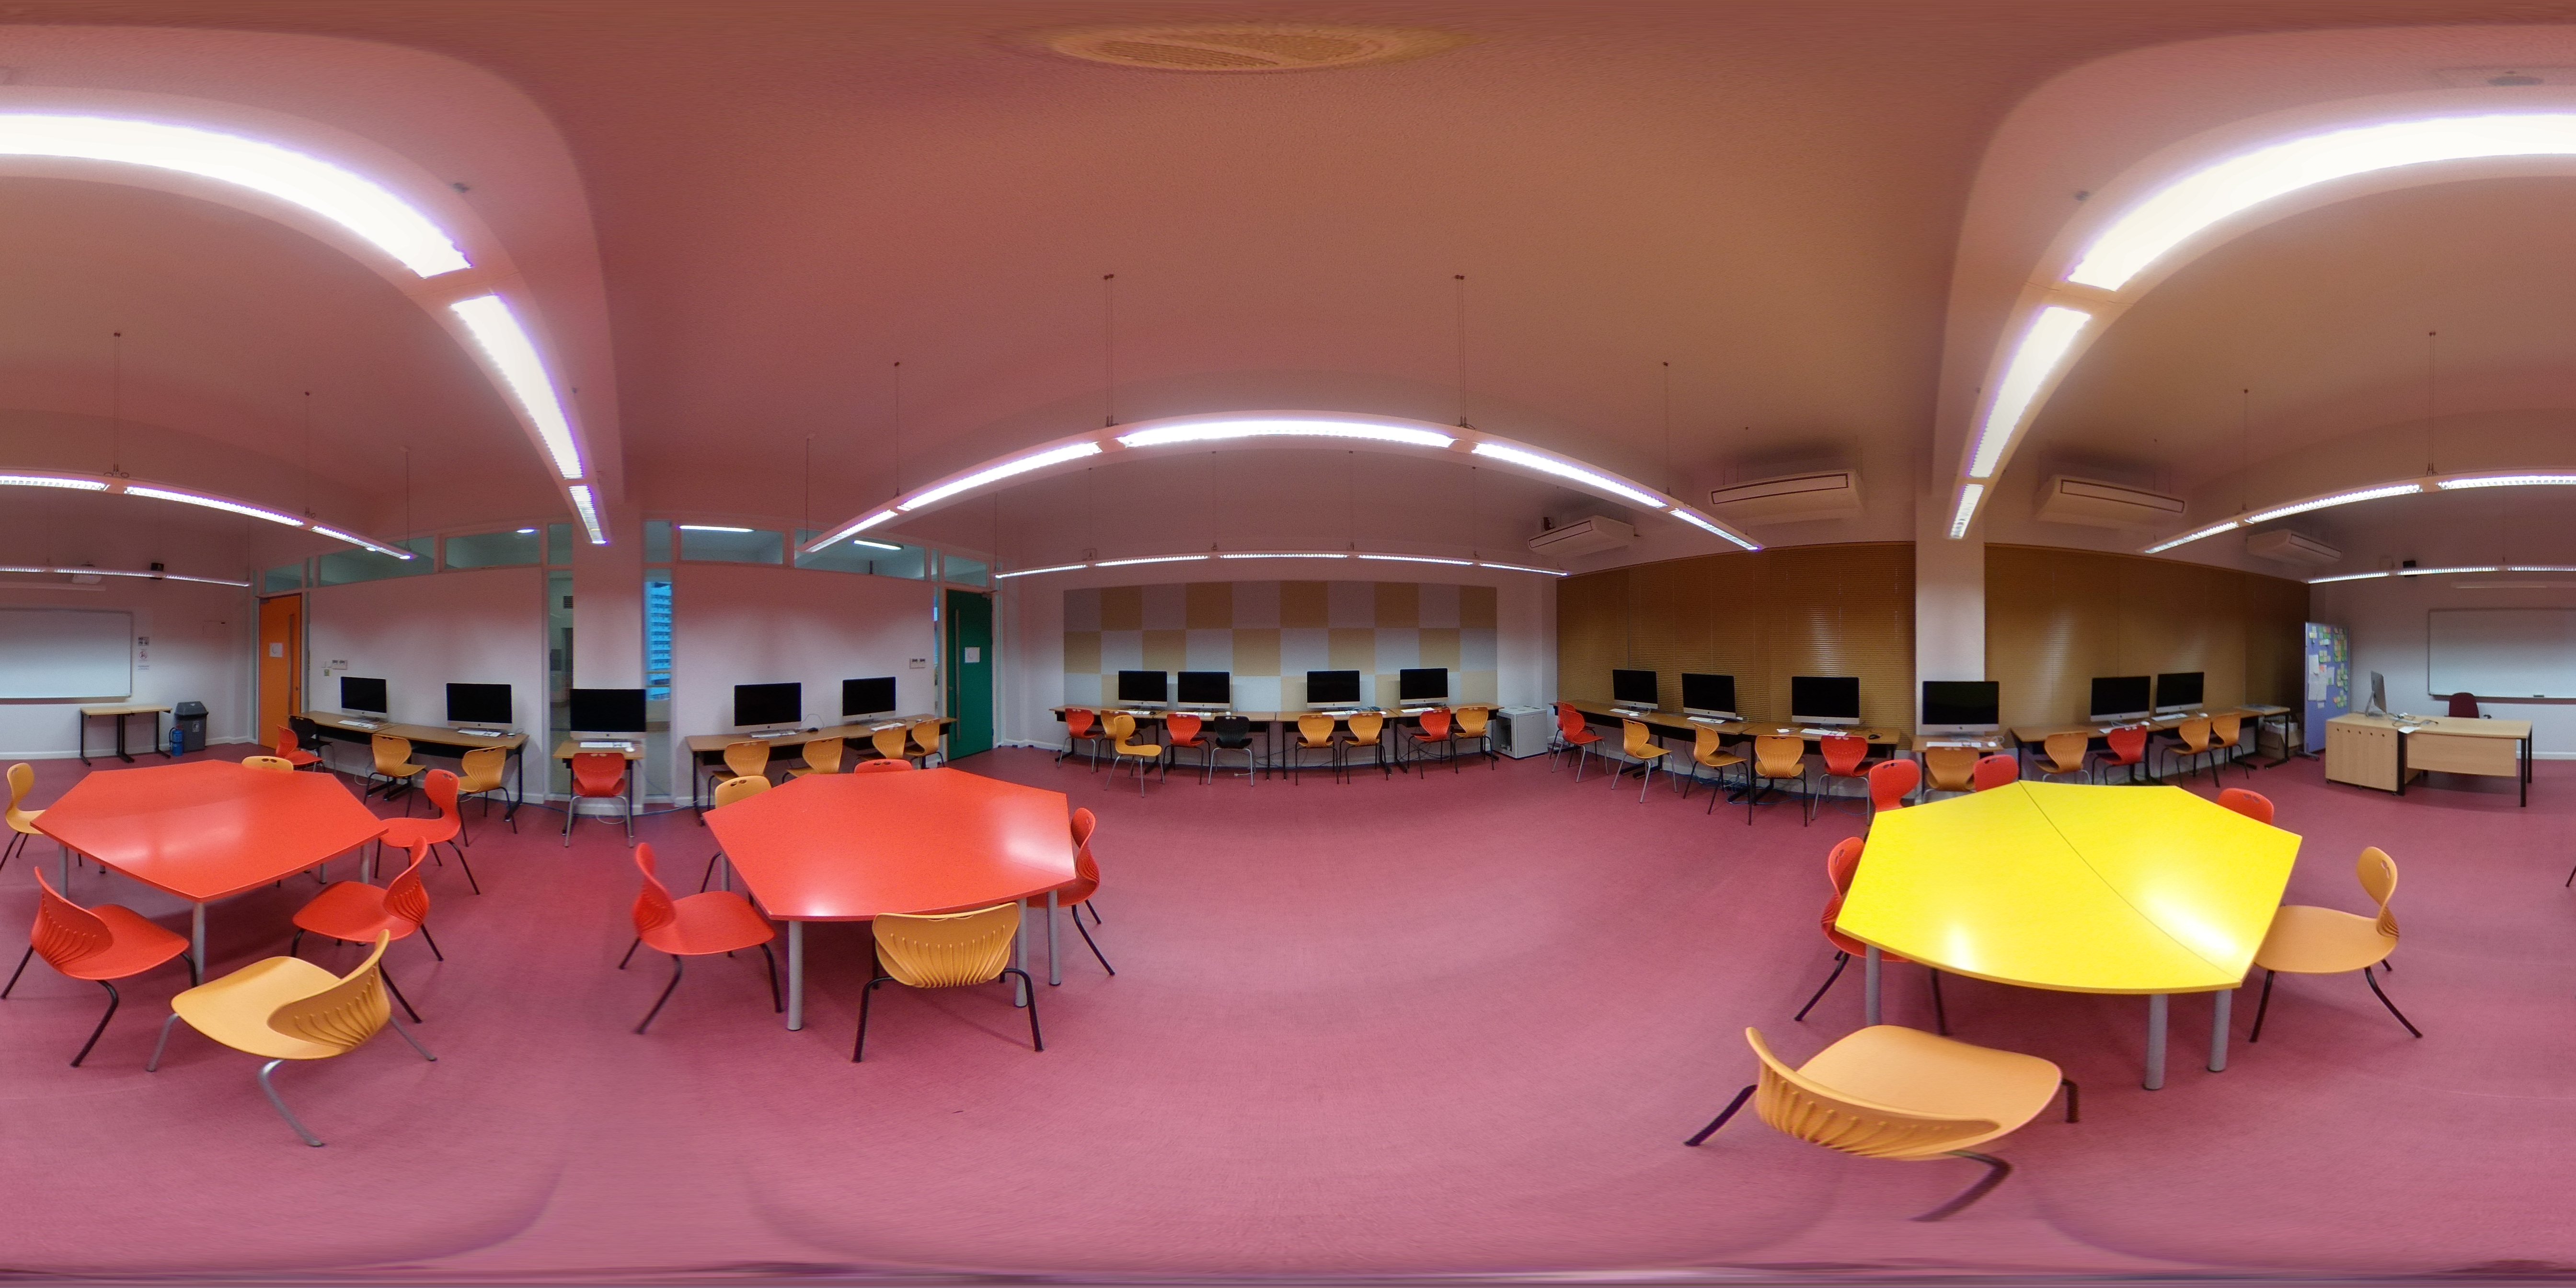 Equirectangular photo of a classroom